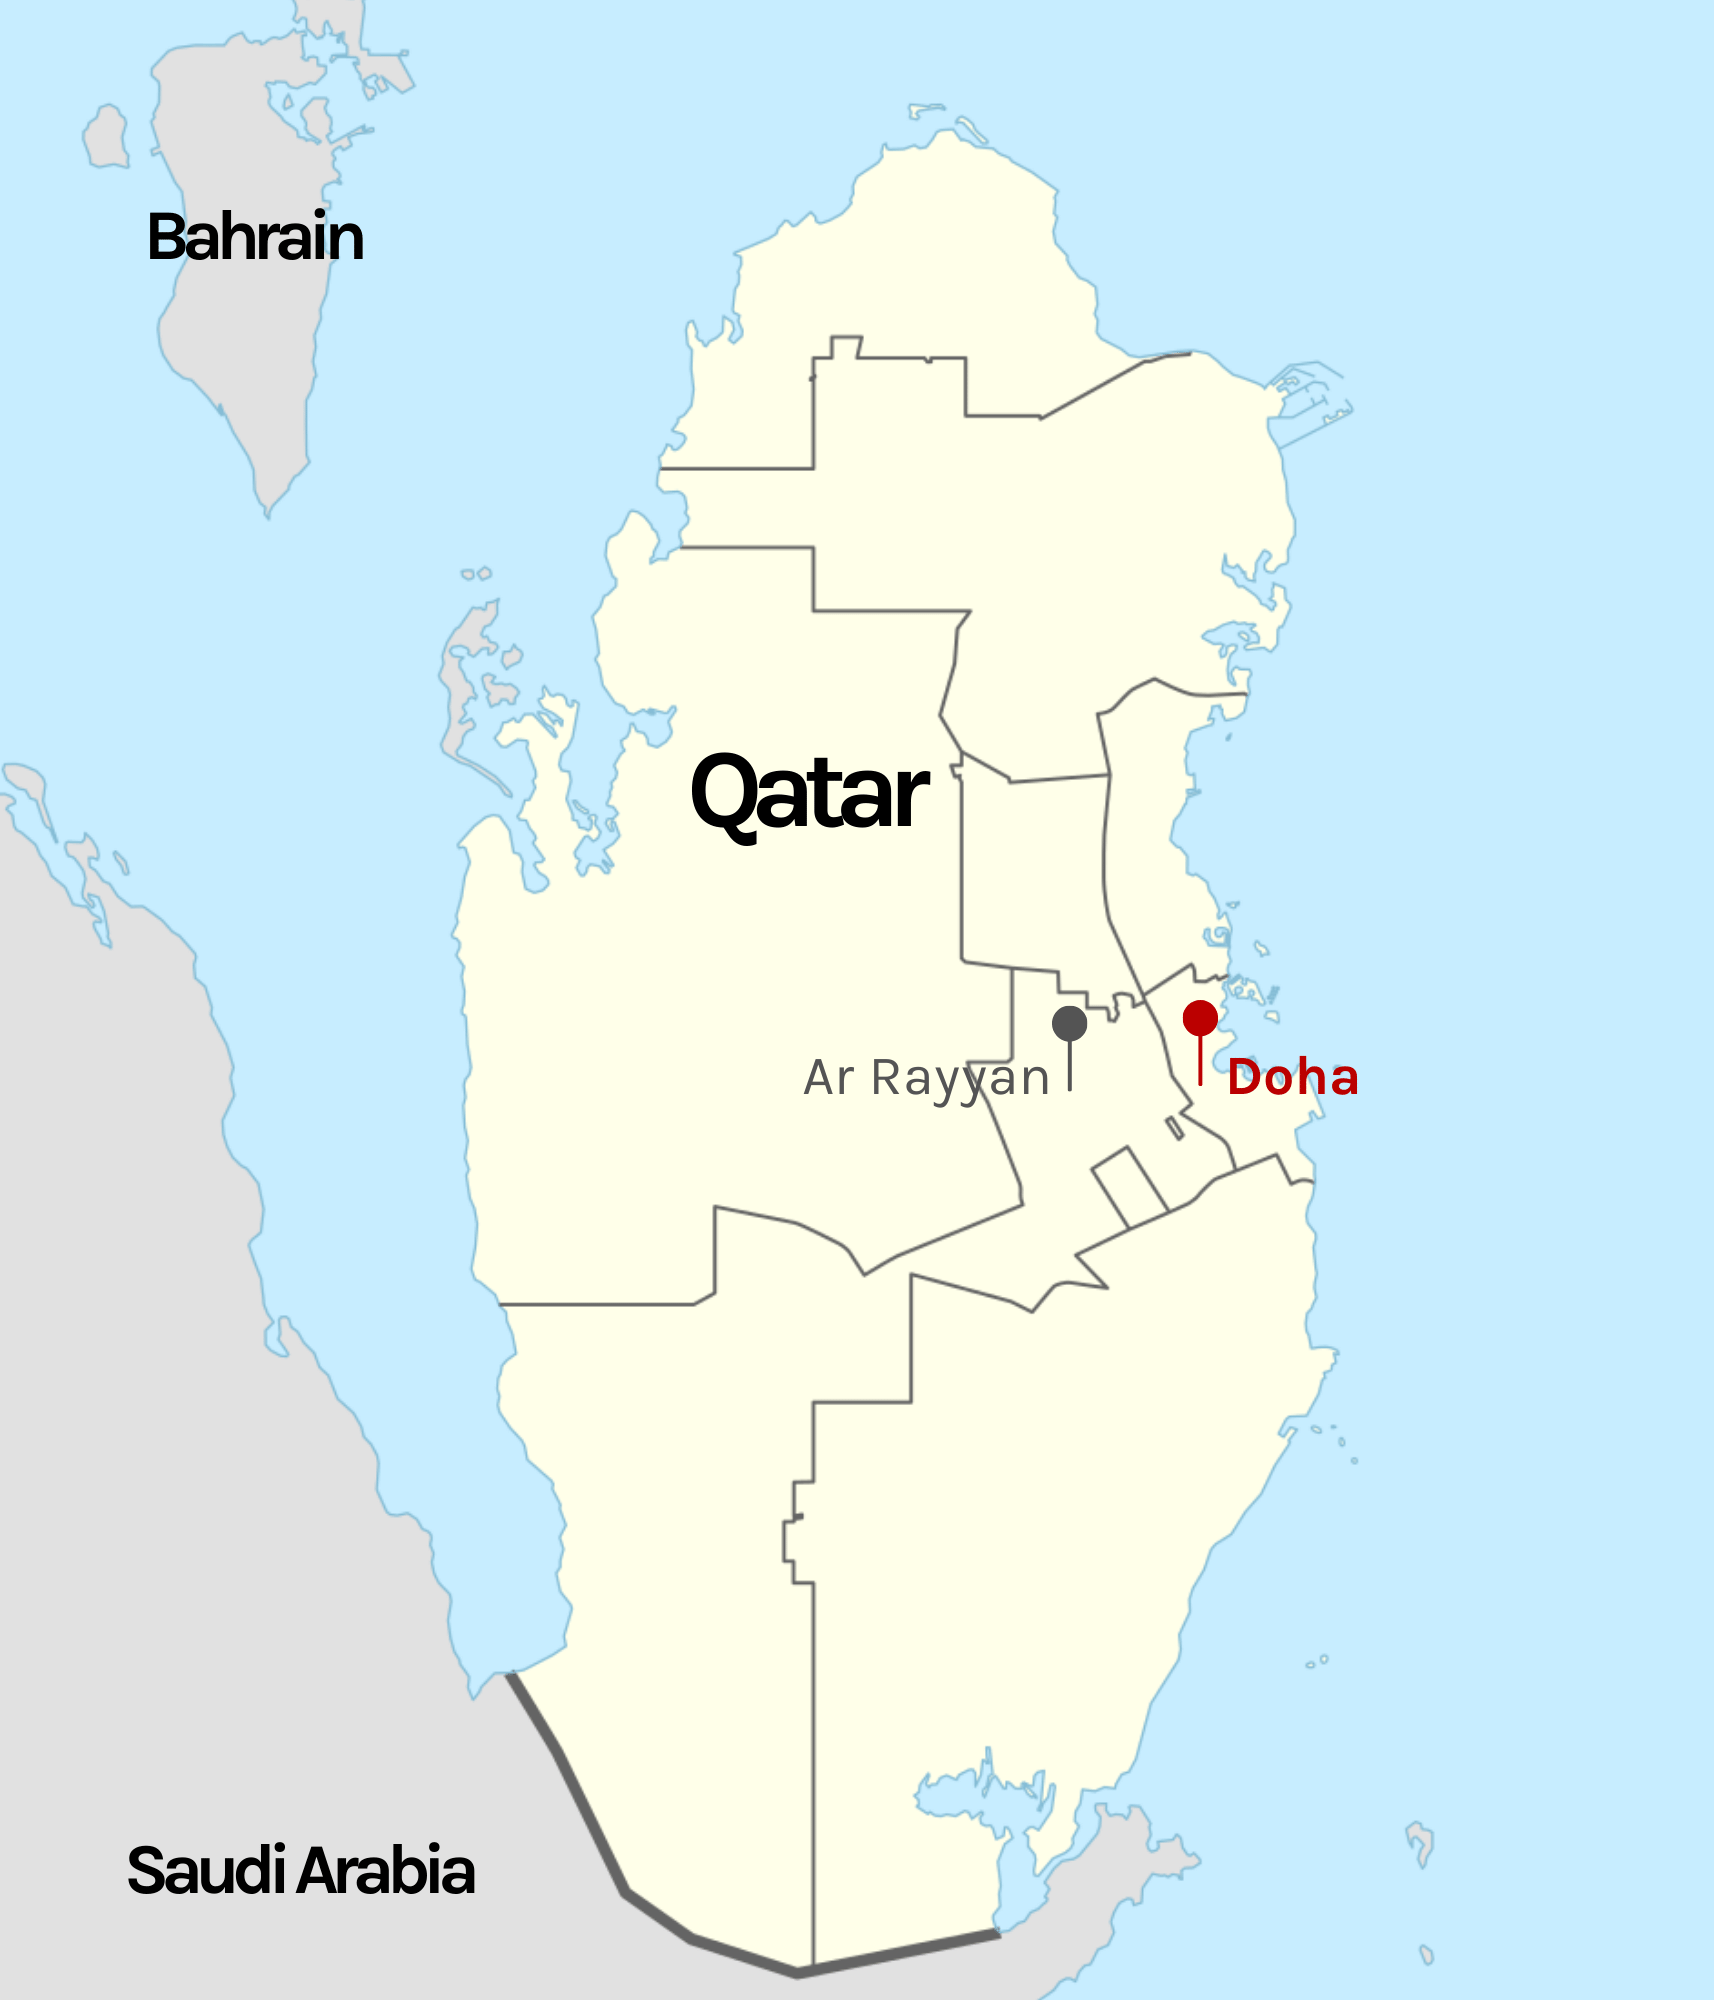 Doha on map of Qatar